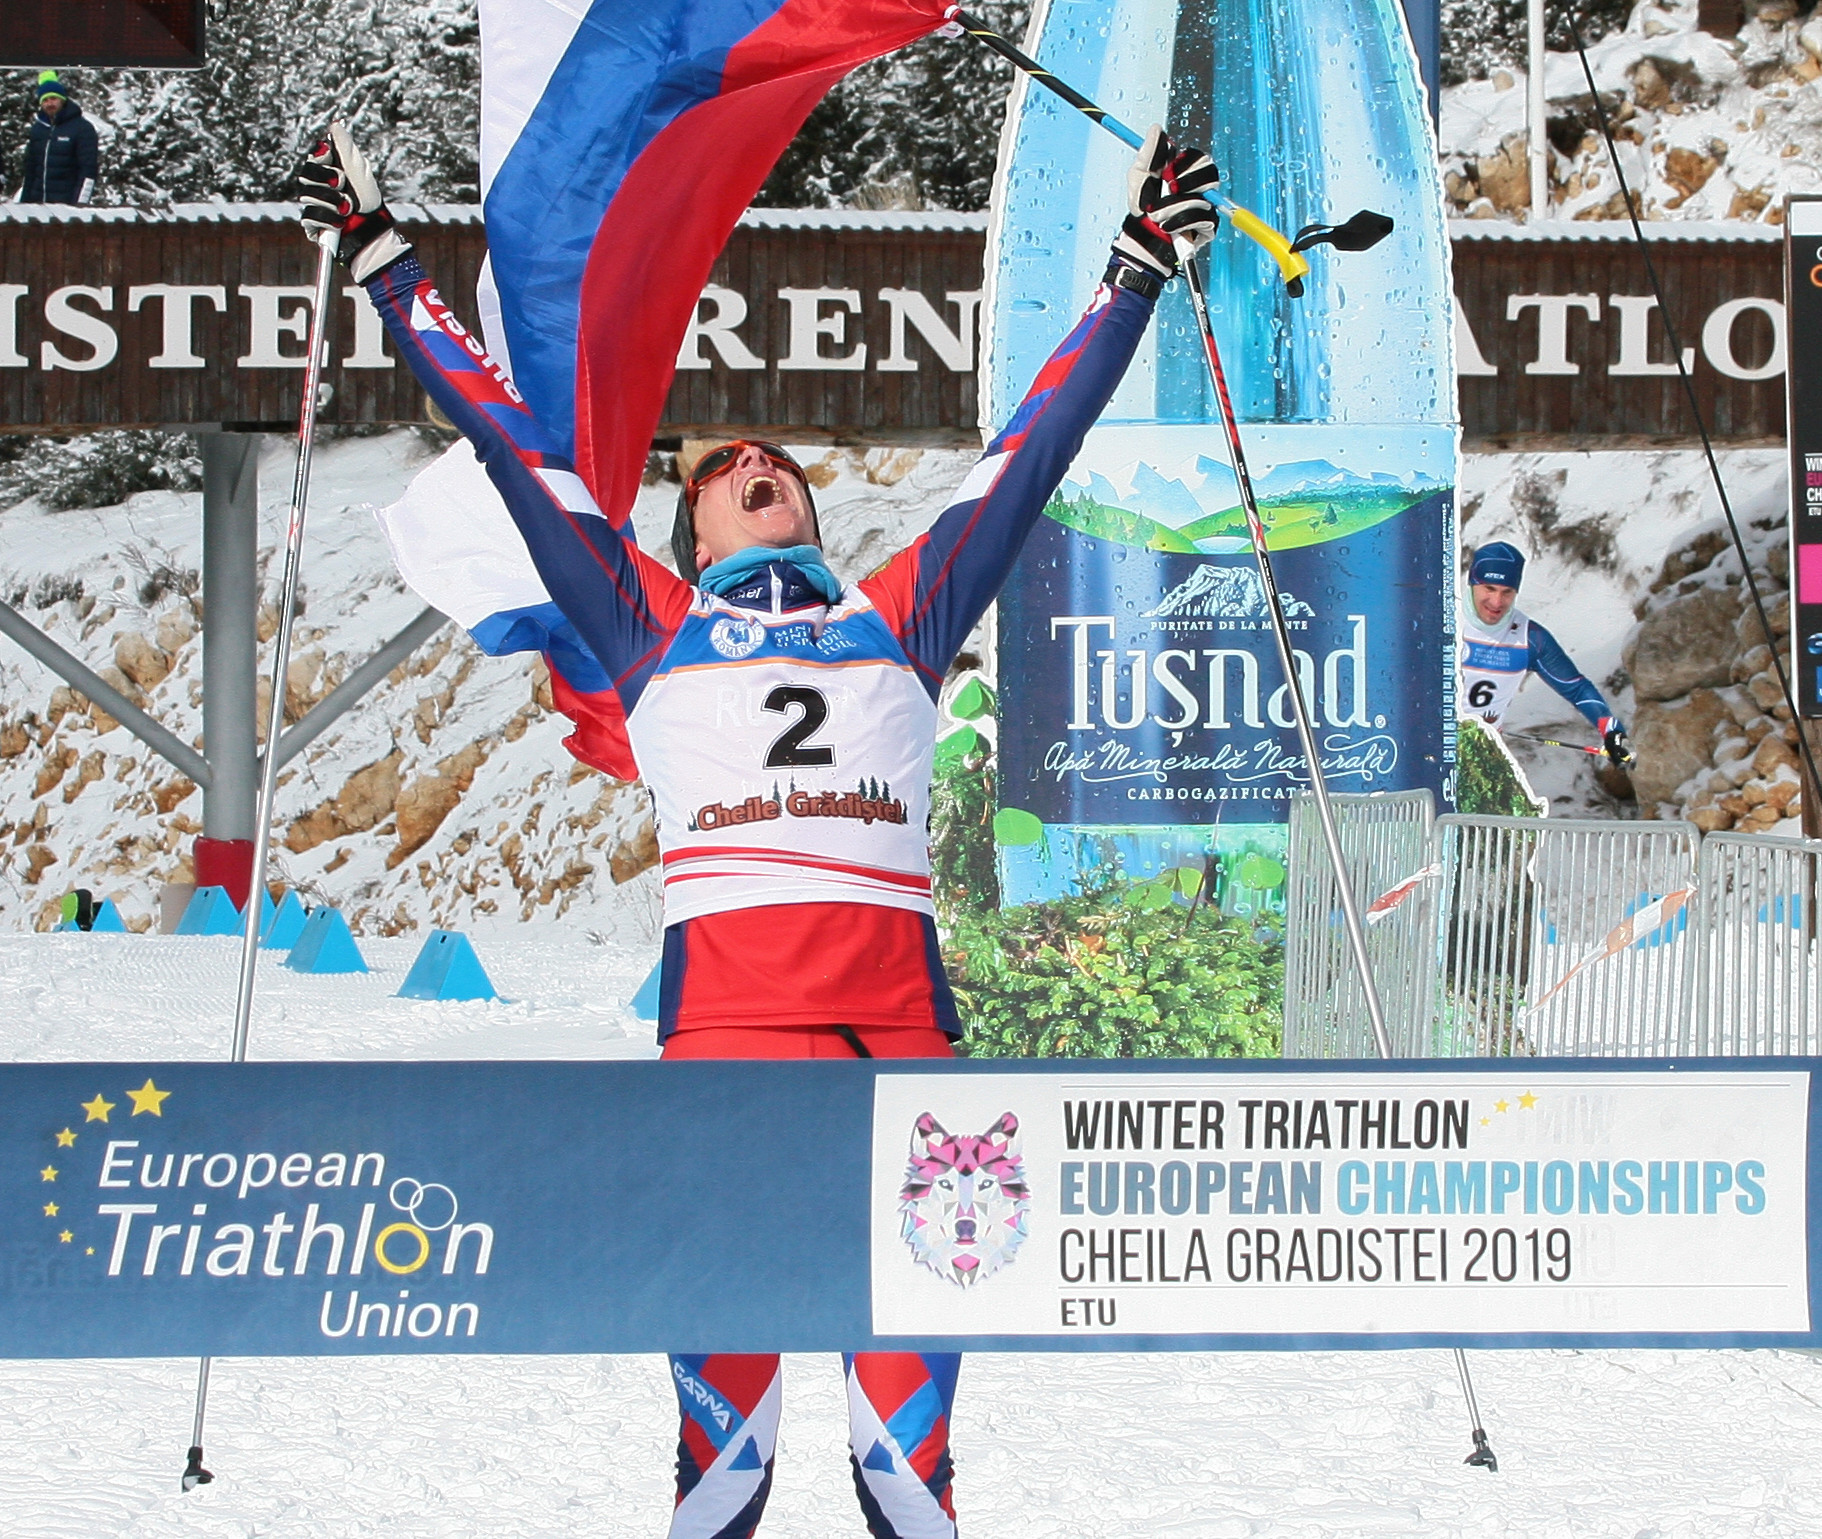 The Winter Triathlon European Championships in Cheile Gradistei in Romania will launch the ETU season in 2020 ©ETU